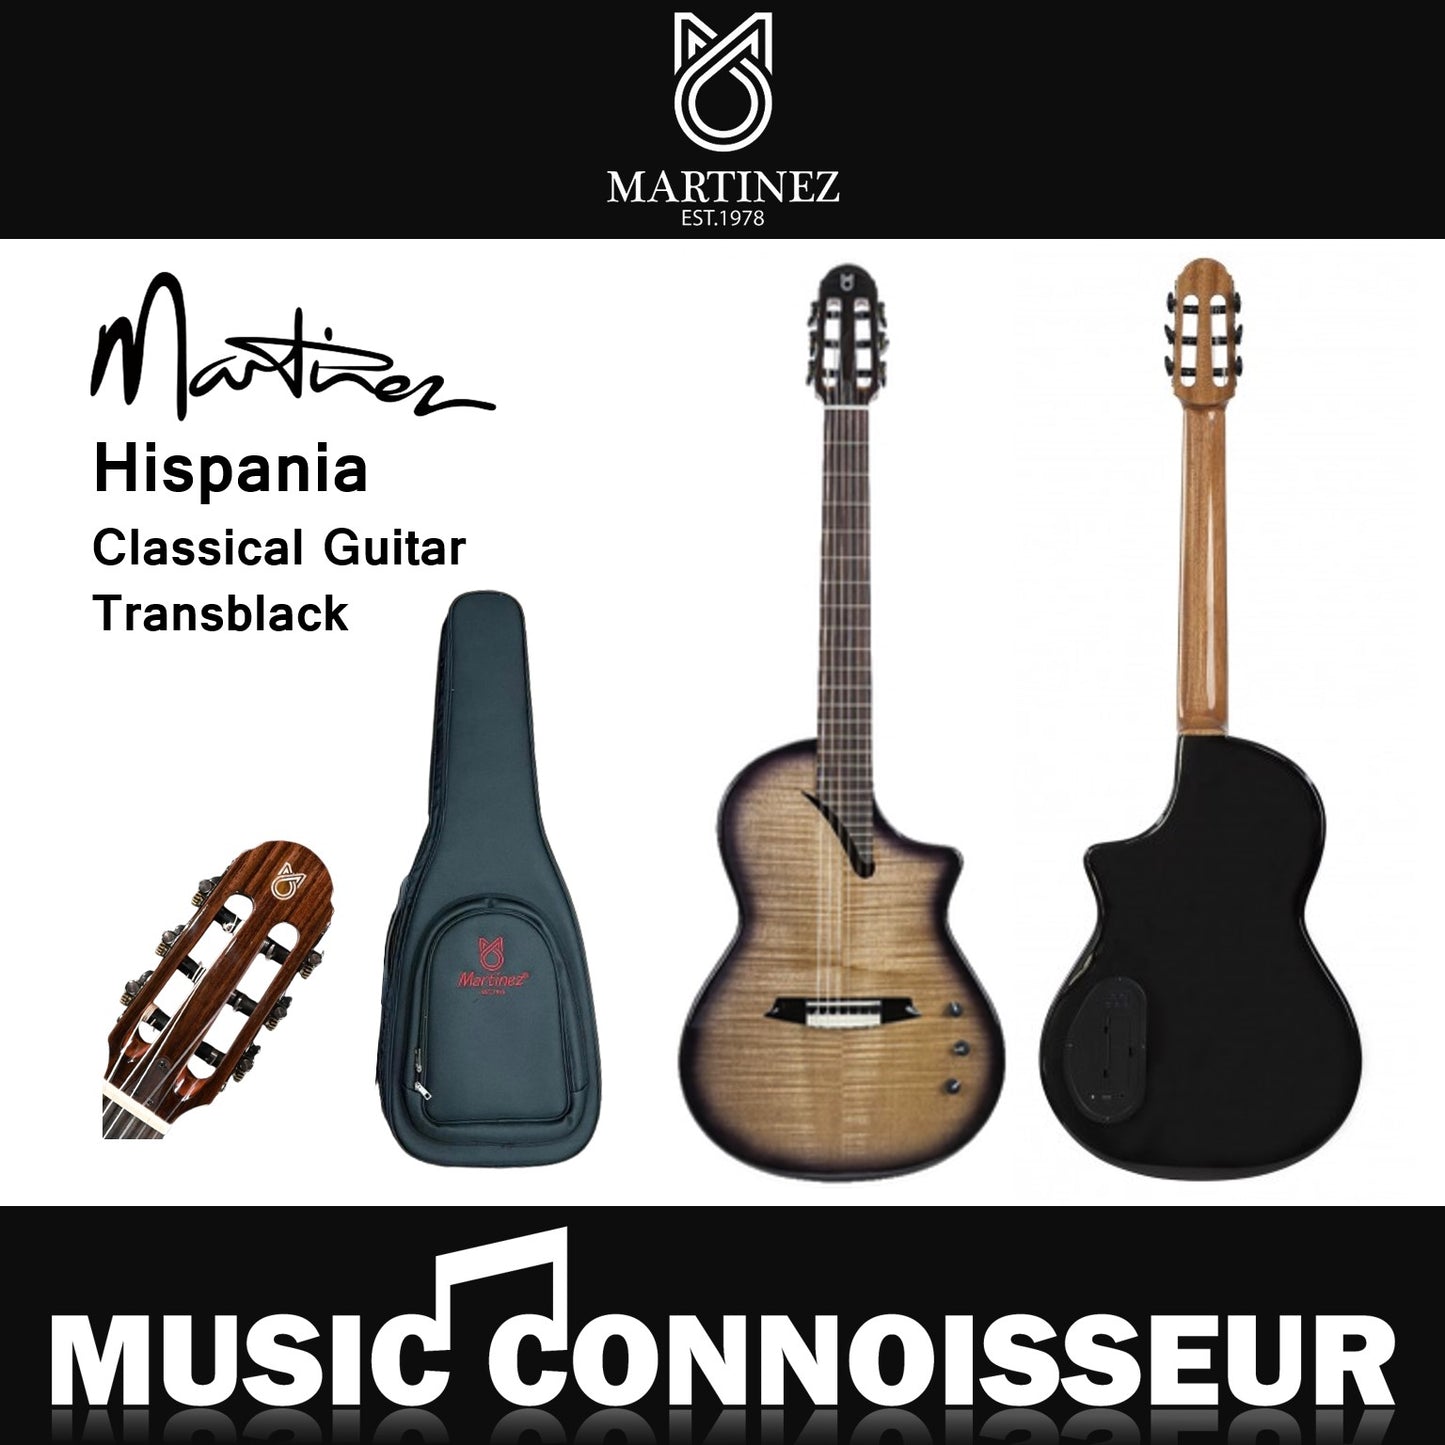 Martinez Hispania Classical Guitar TransBlack